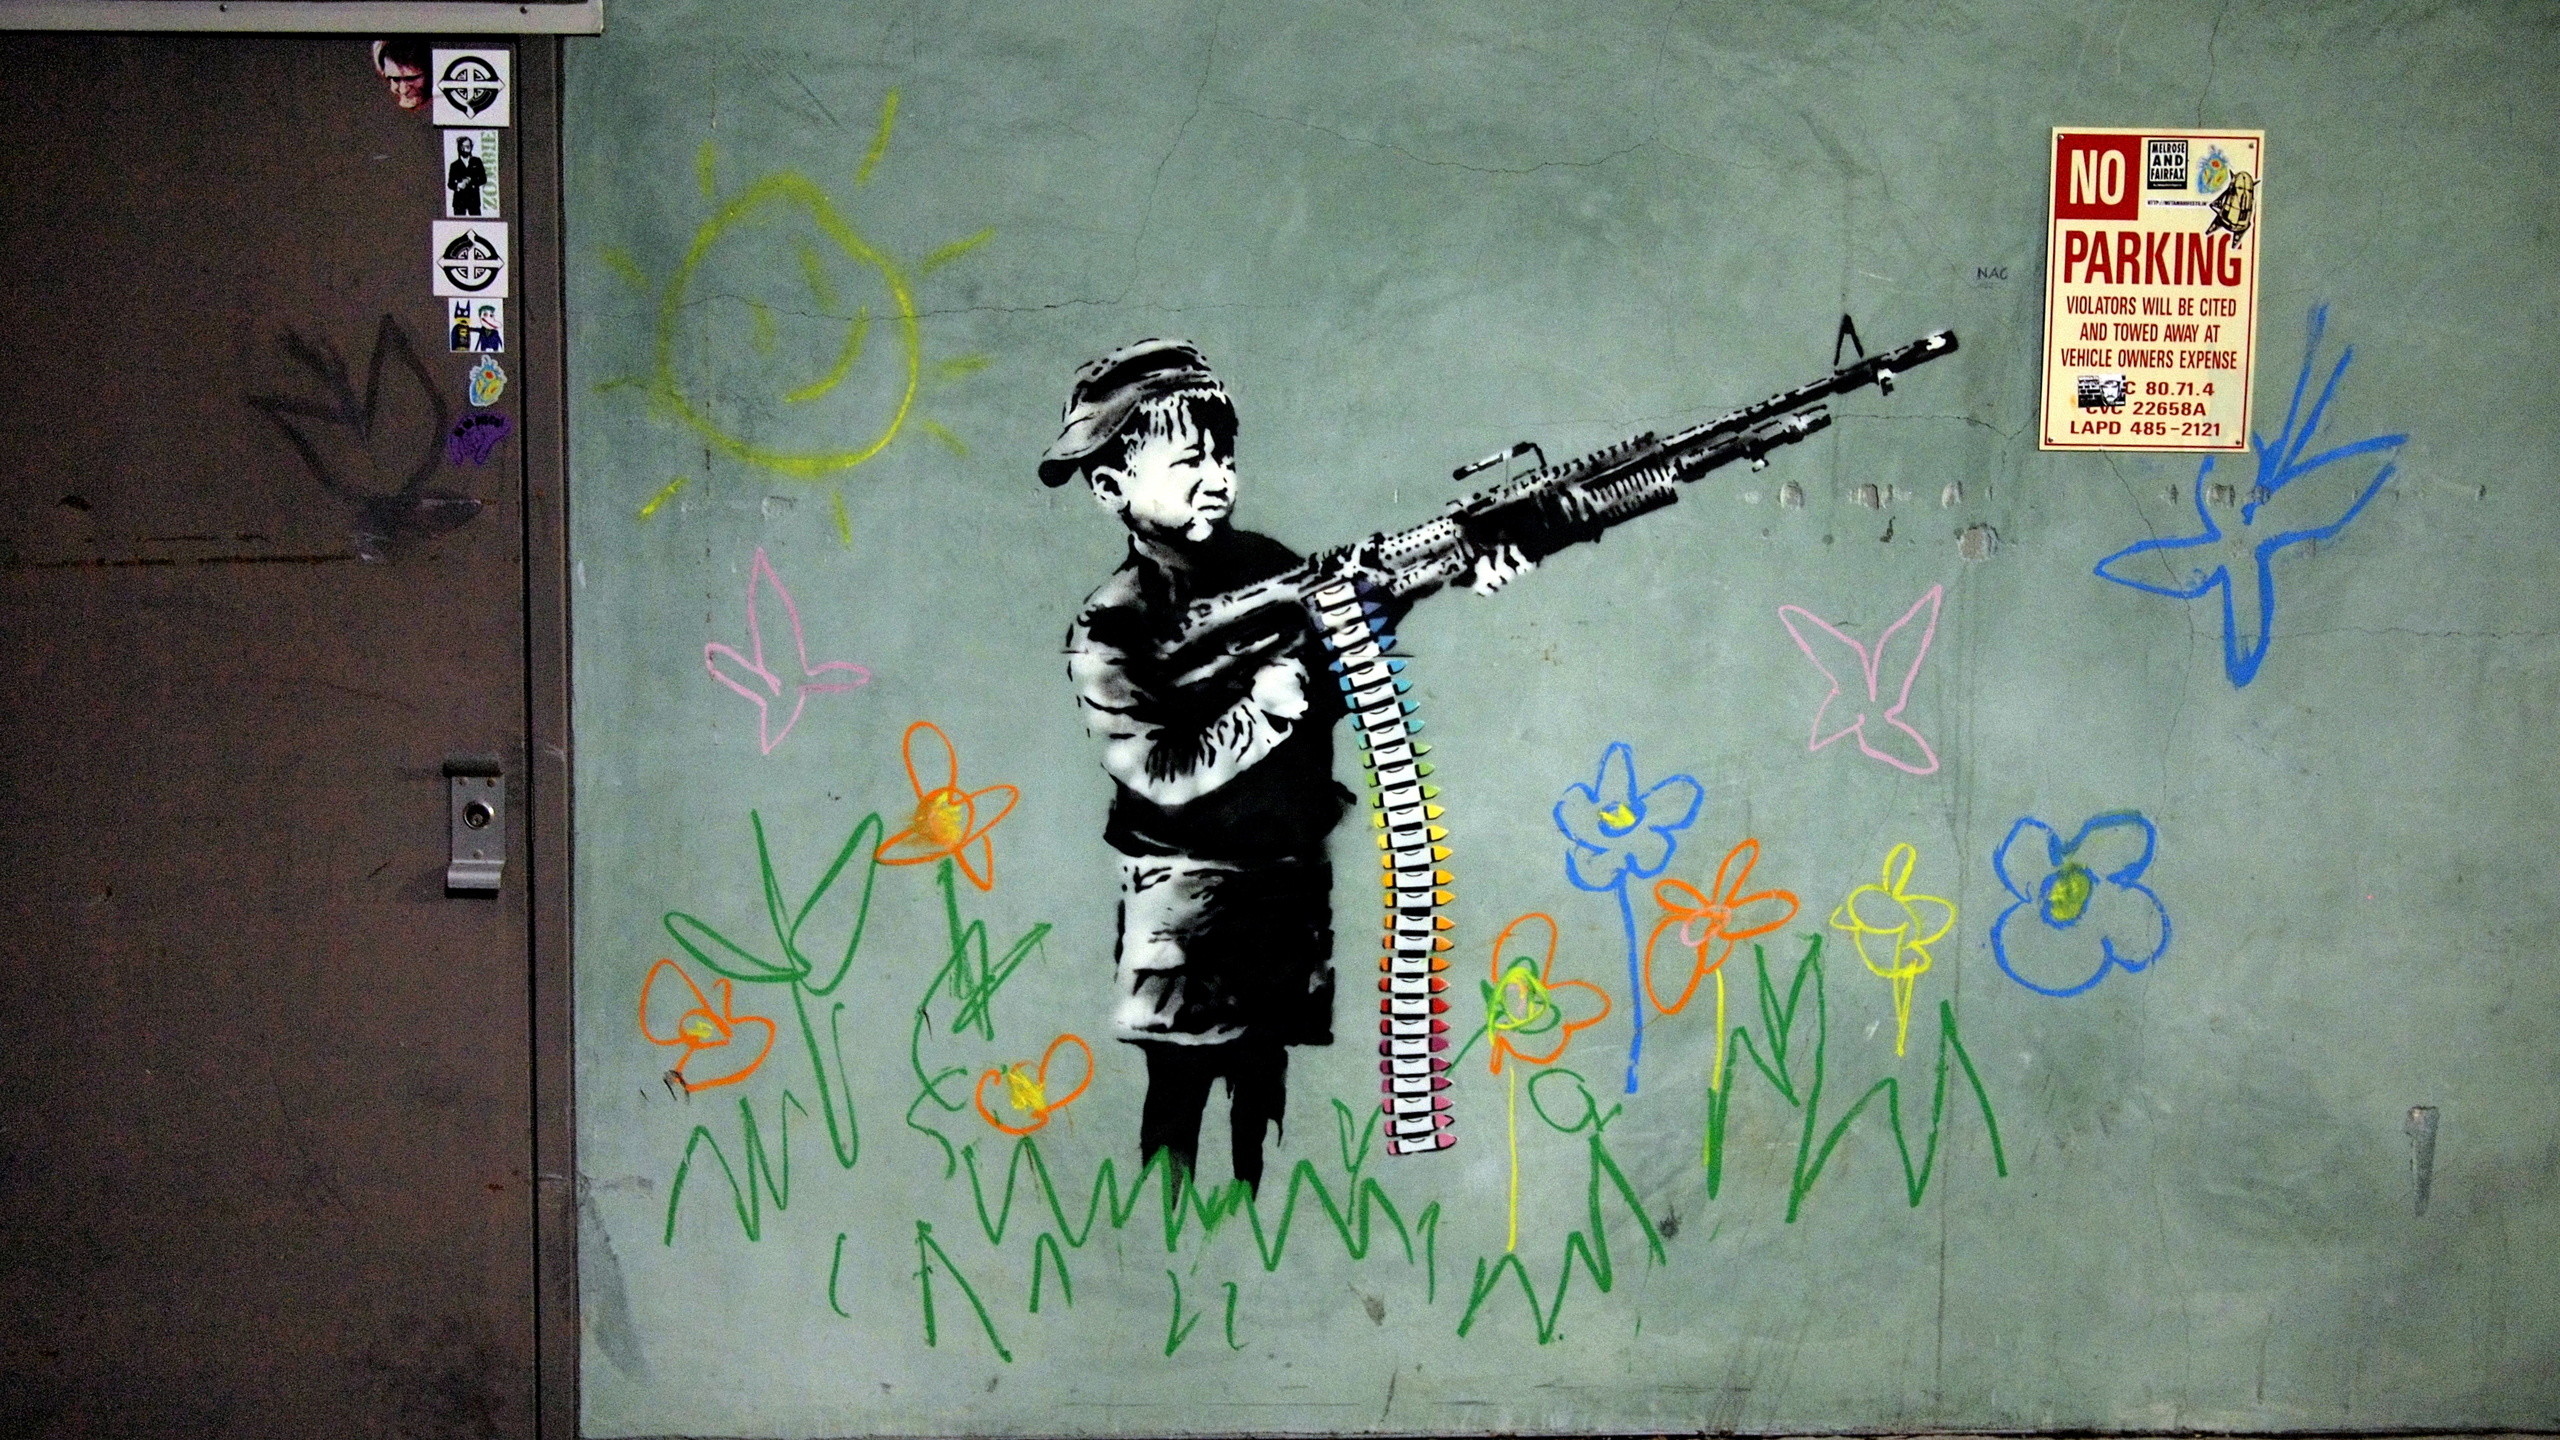 2560x1440 Banksy Crayola Shooter No Parking, Banksy, Street Art, Streetart, Graffit,  Wall